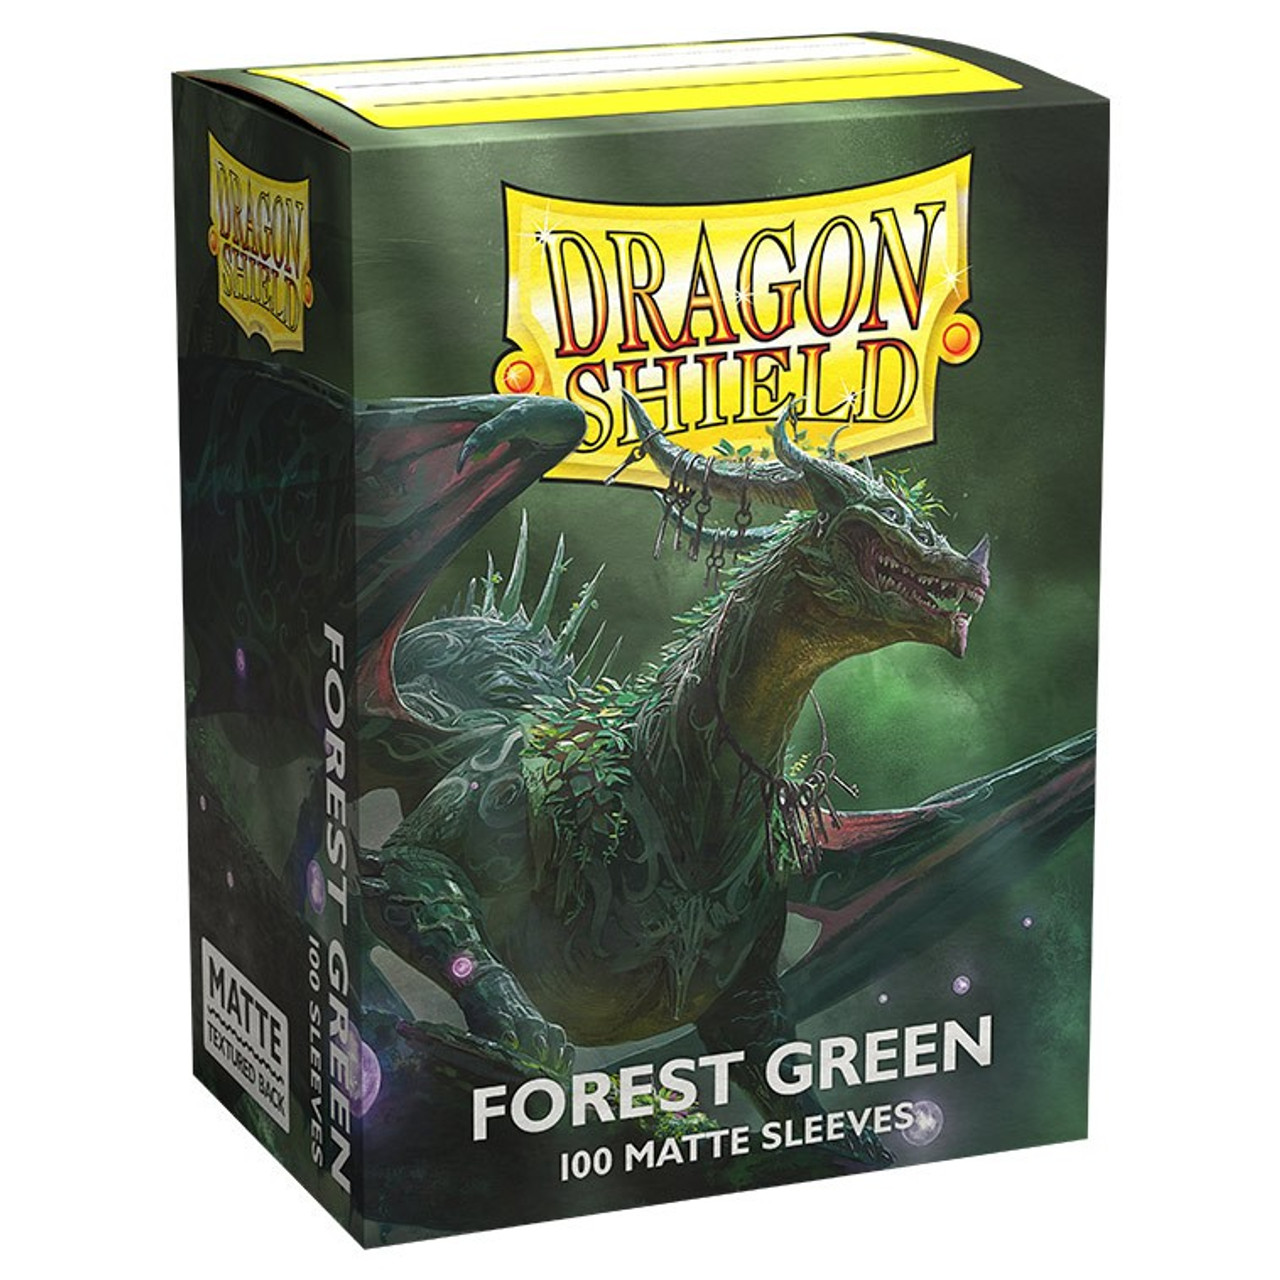 Protector Dragonshield Matte Forest Green - STD